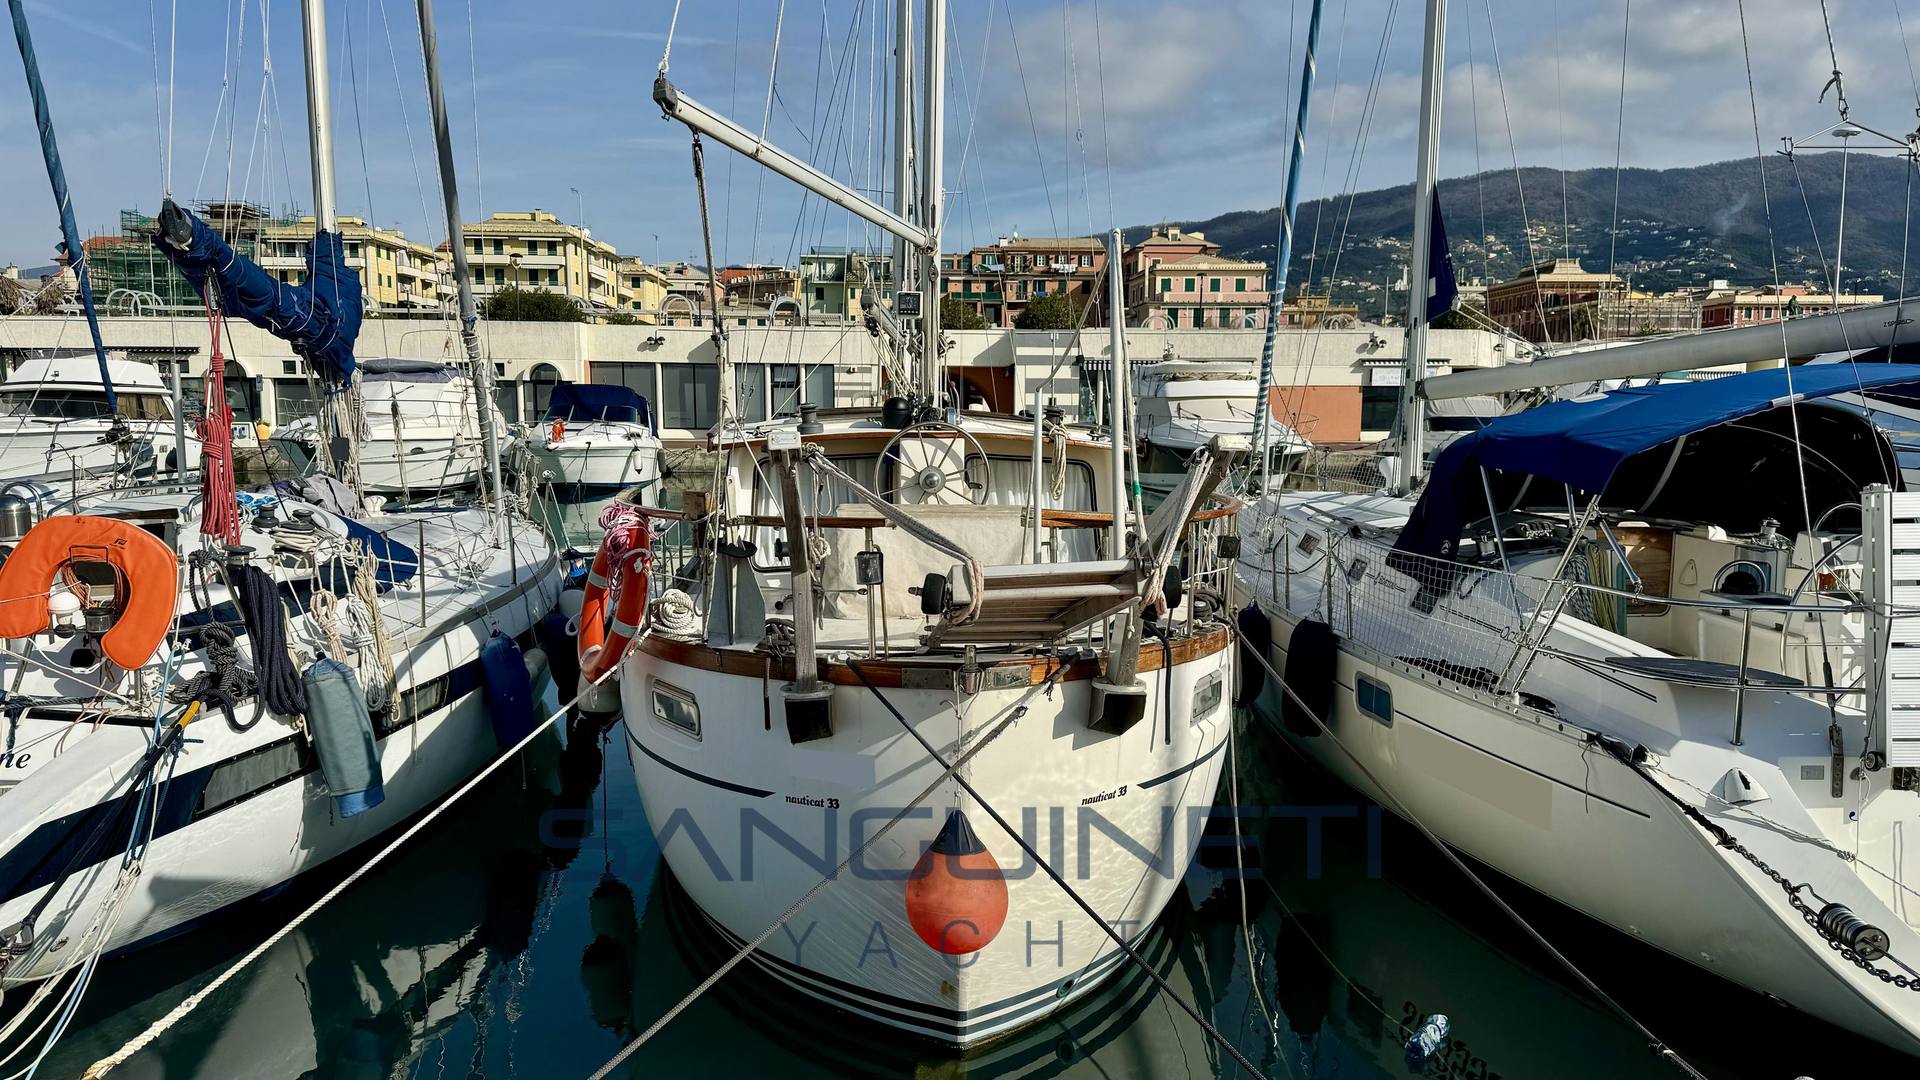 Syltala Nauticat 33 Motor boat used for sale